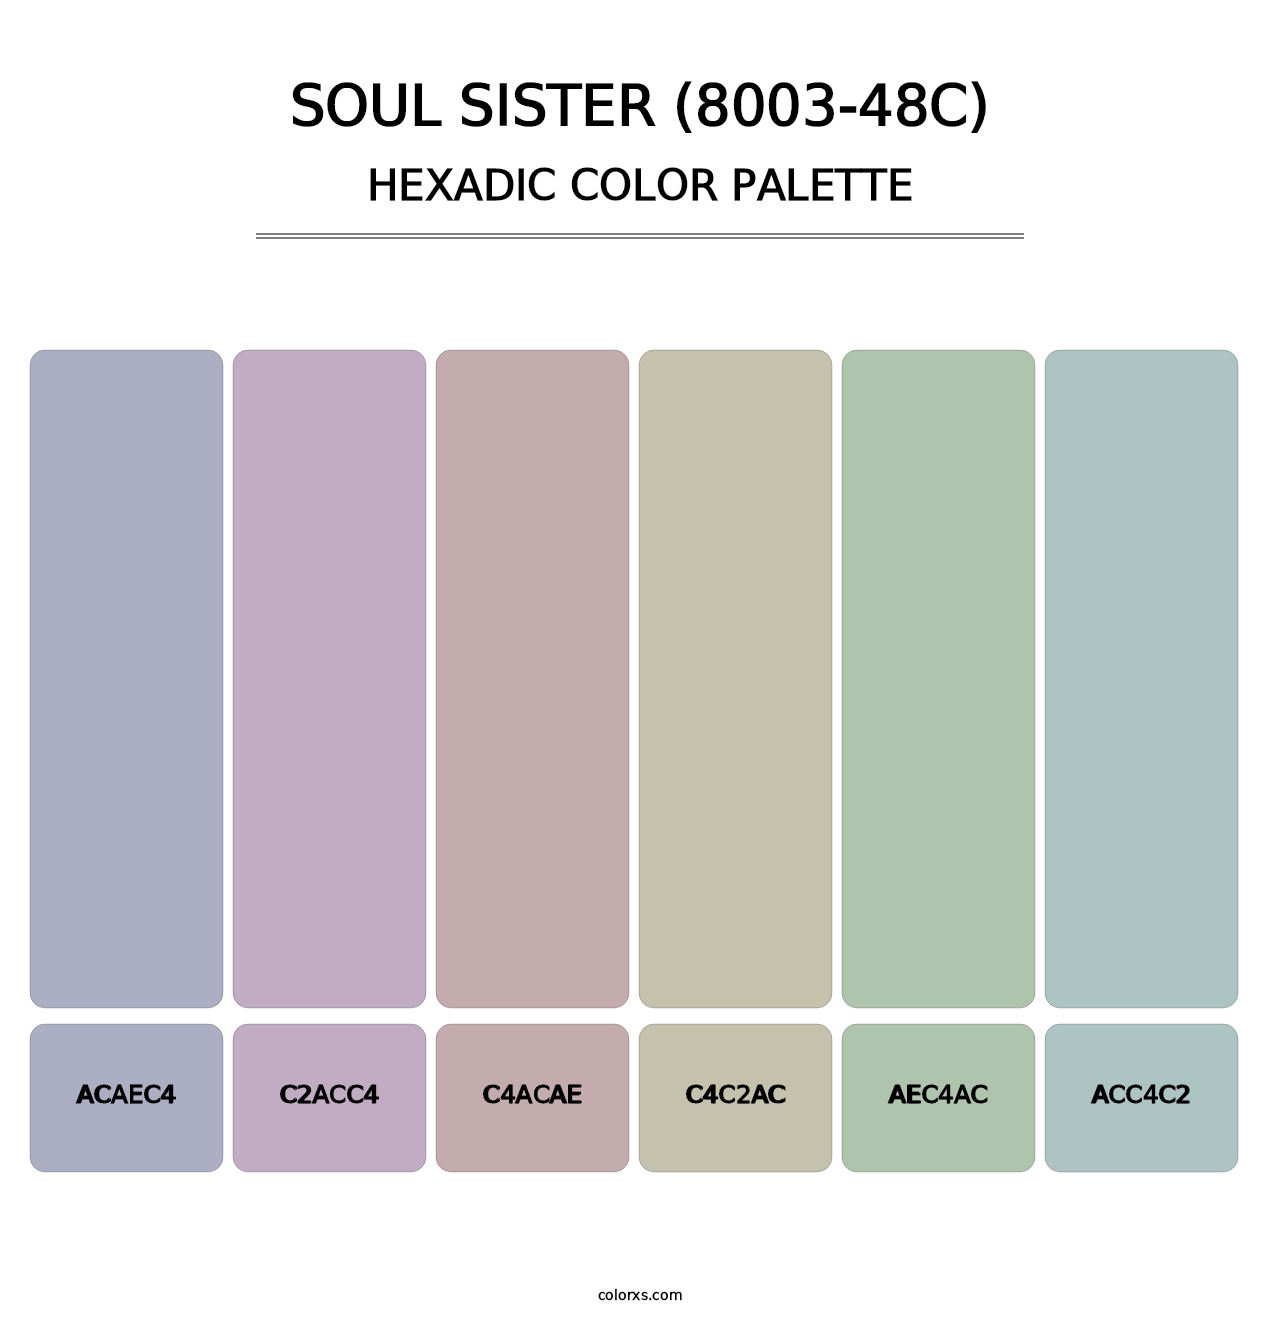 Soul Sister (8003-48C) - Hexadic Color Palette